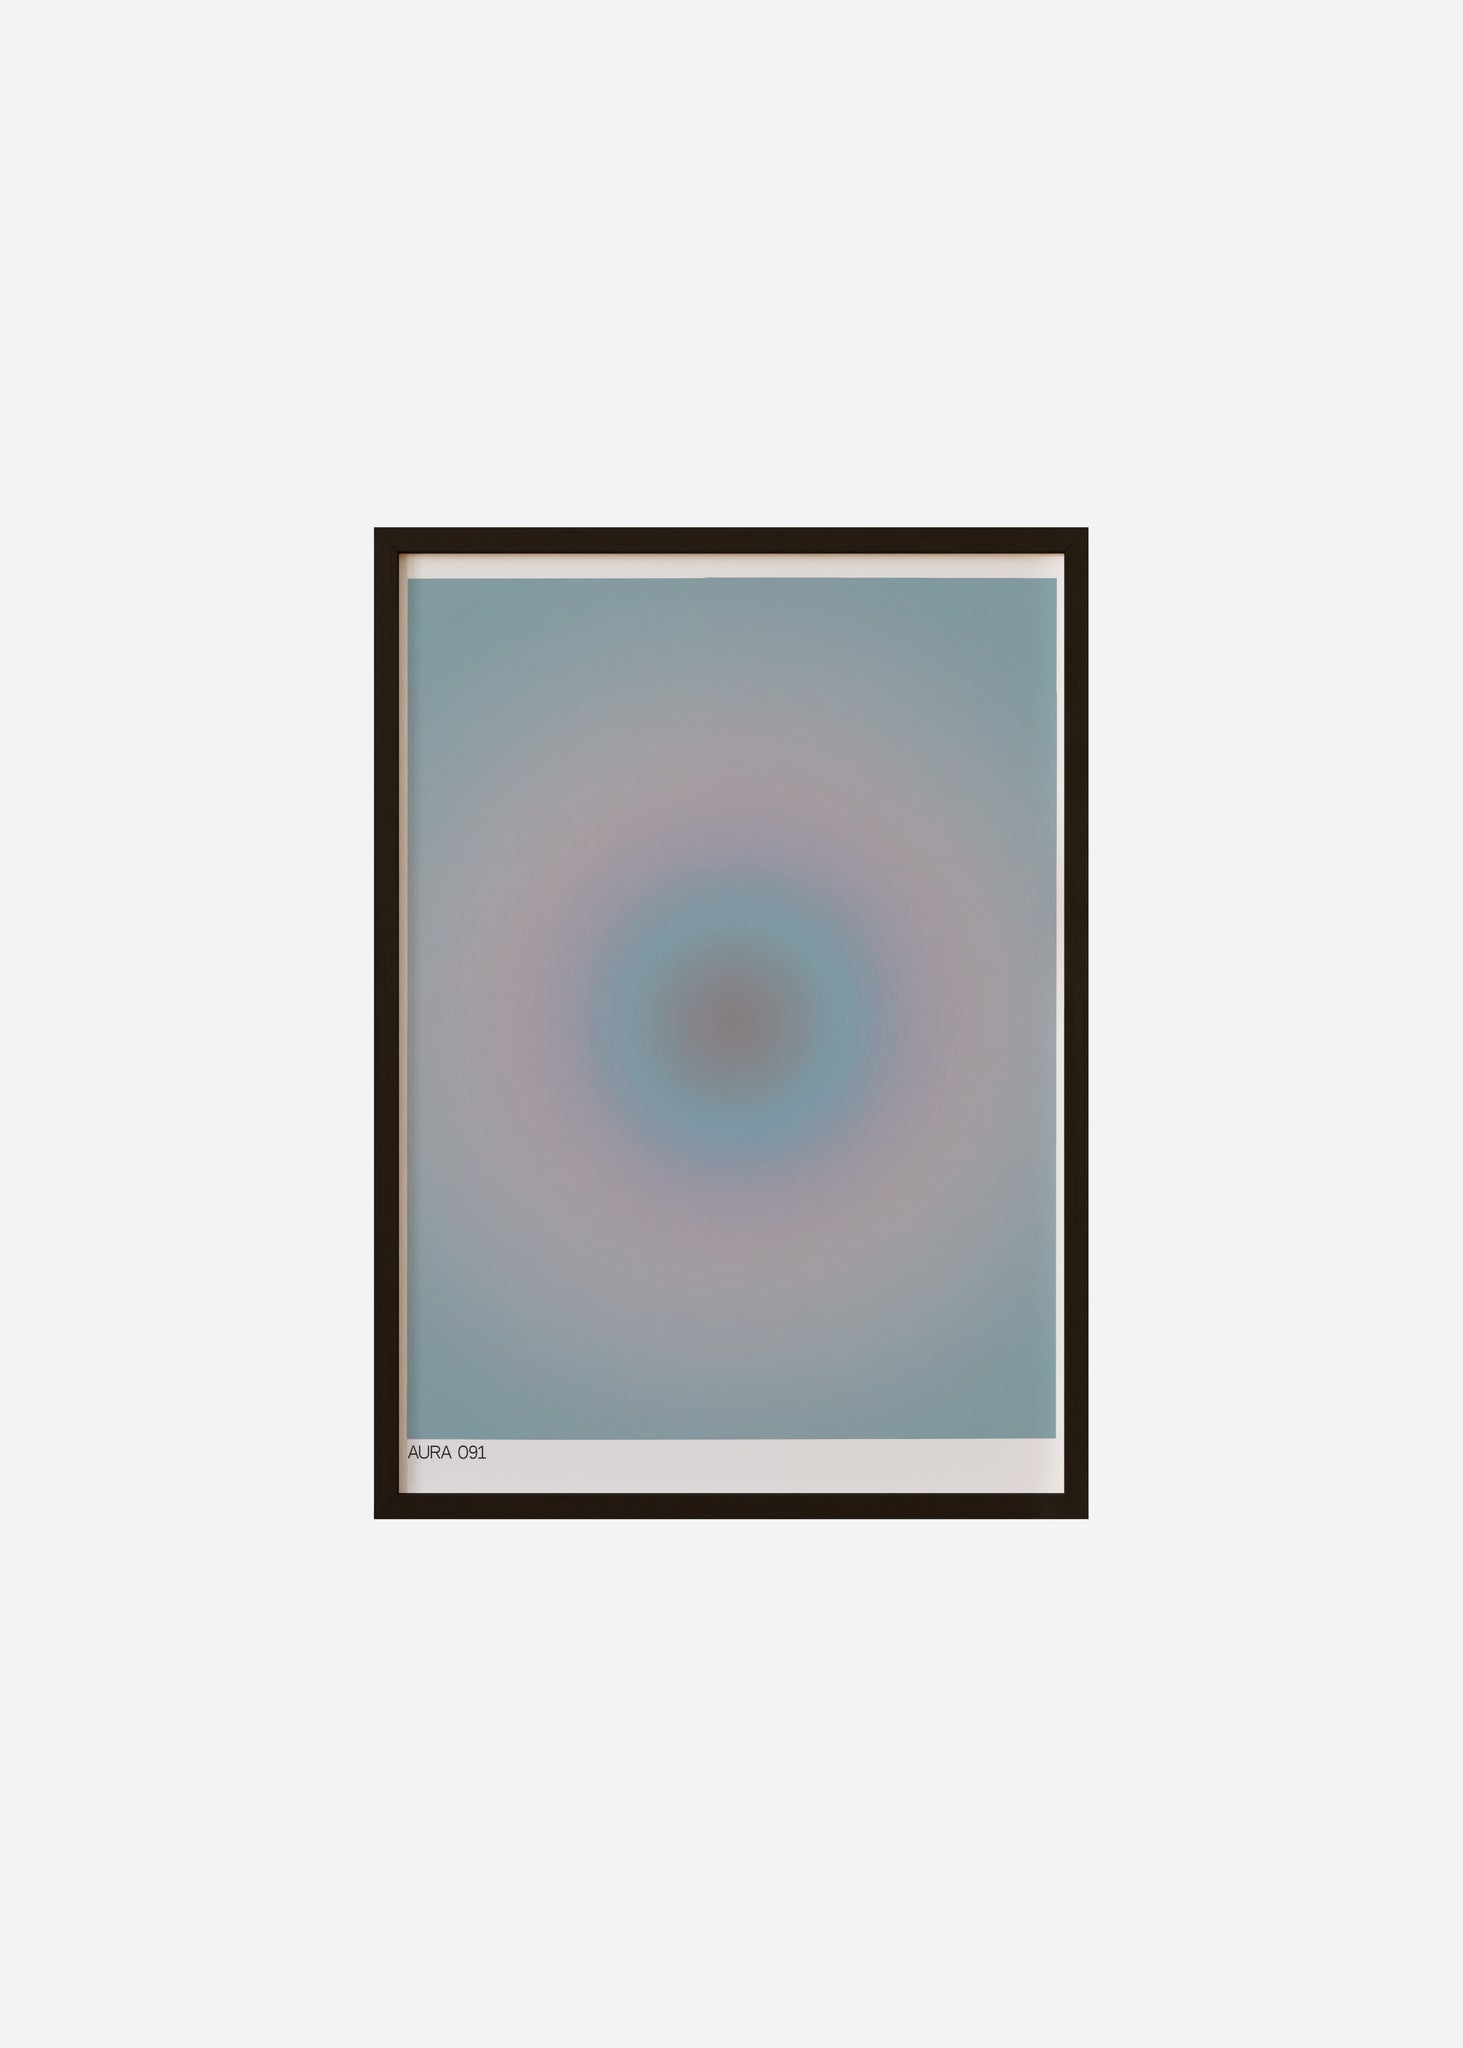 aura 091 Framed Print